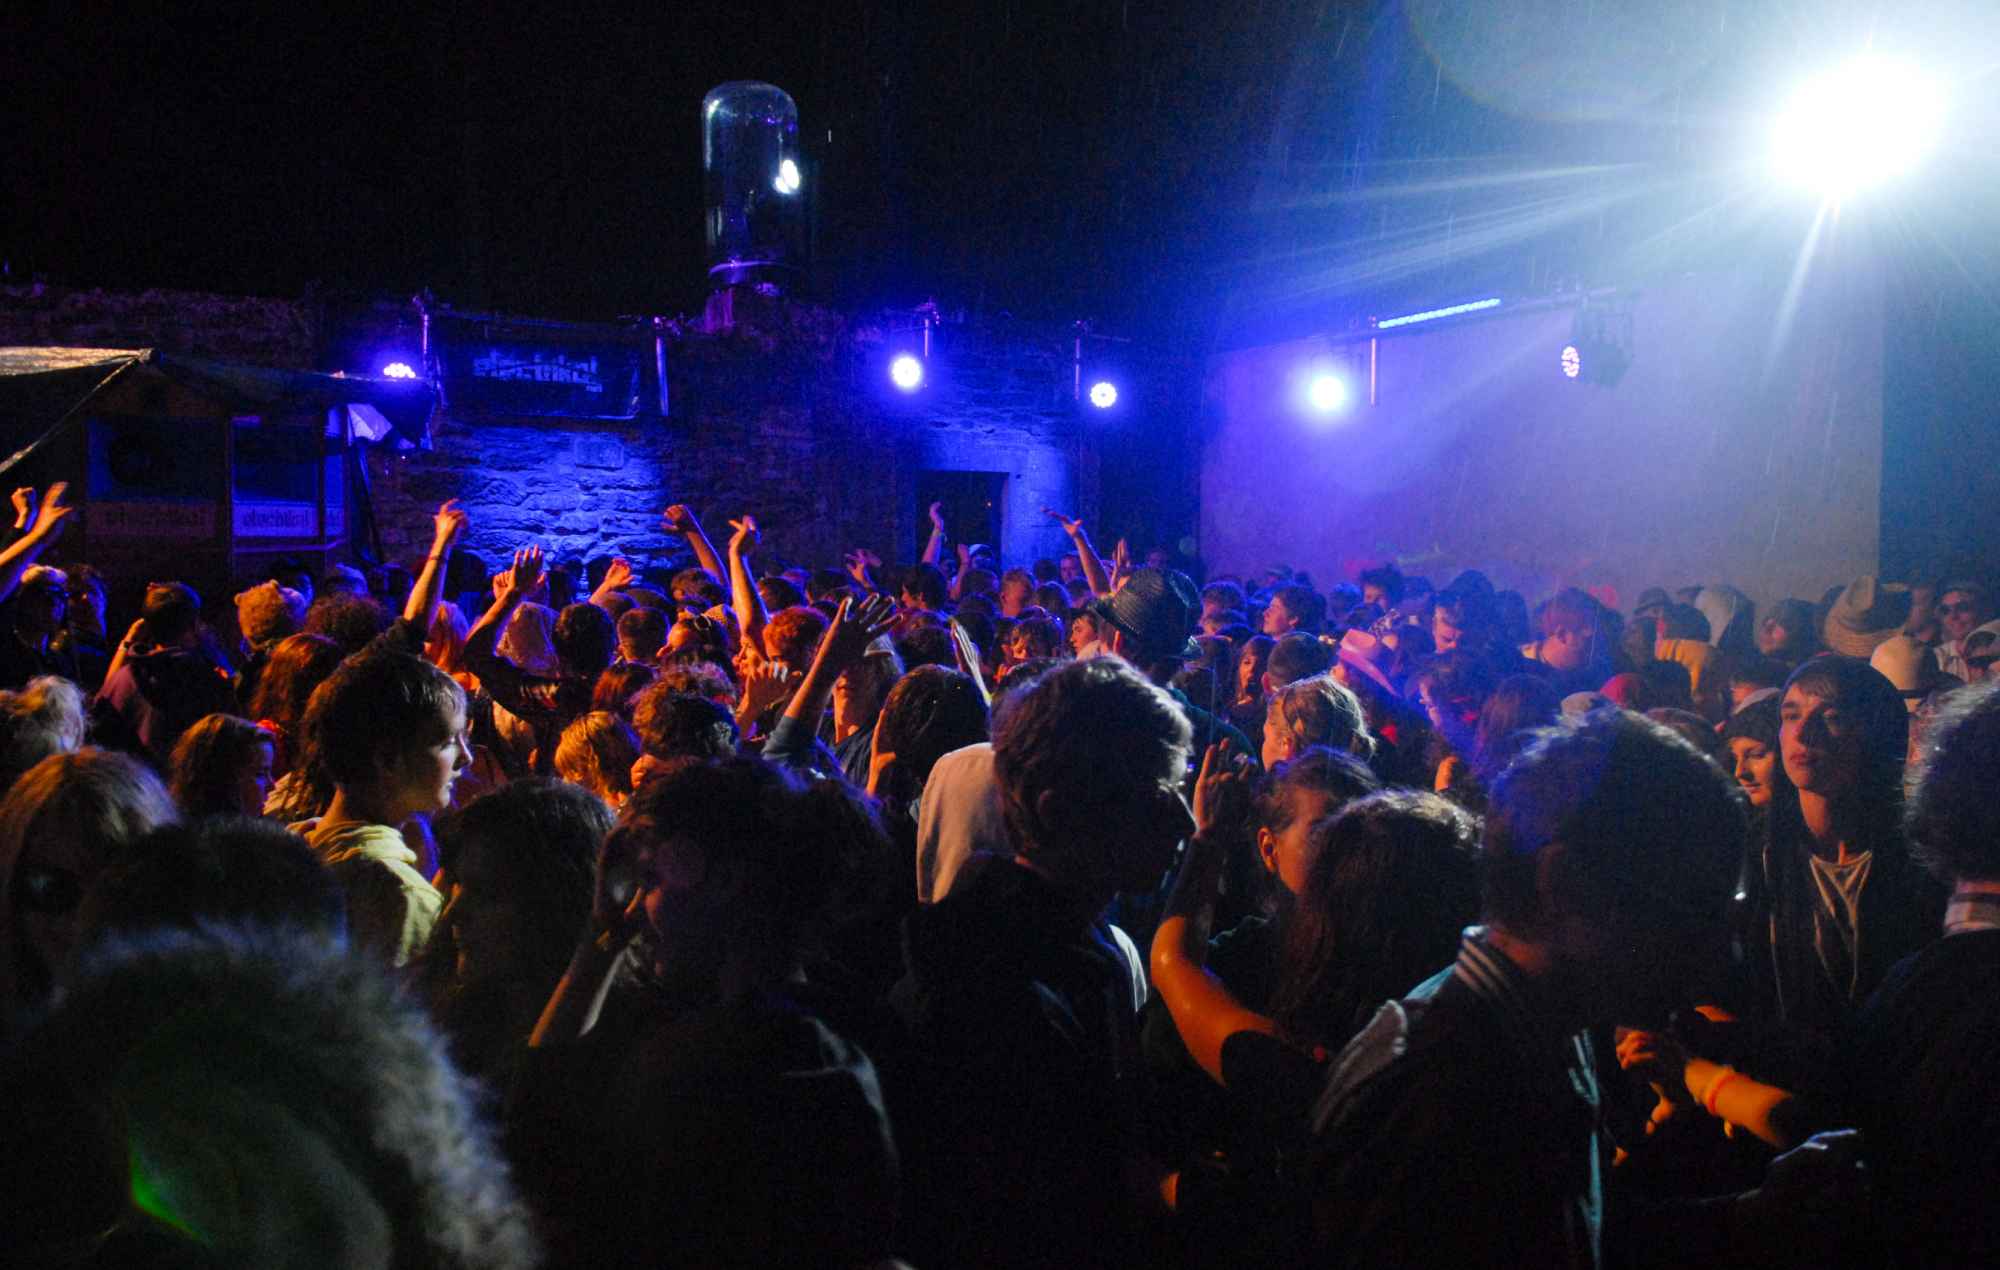 Two “massive” raves kept “half of Sheffield awake” on Saturday